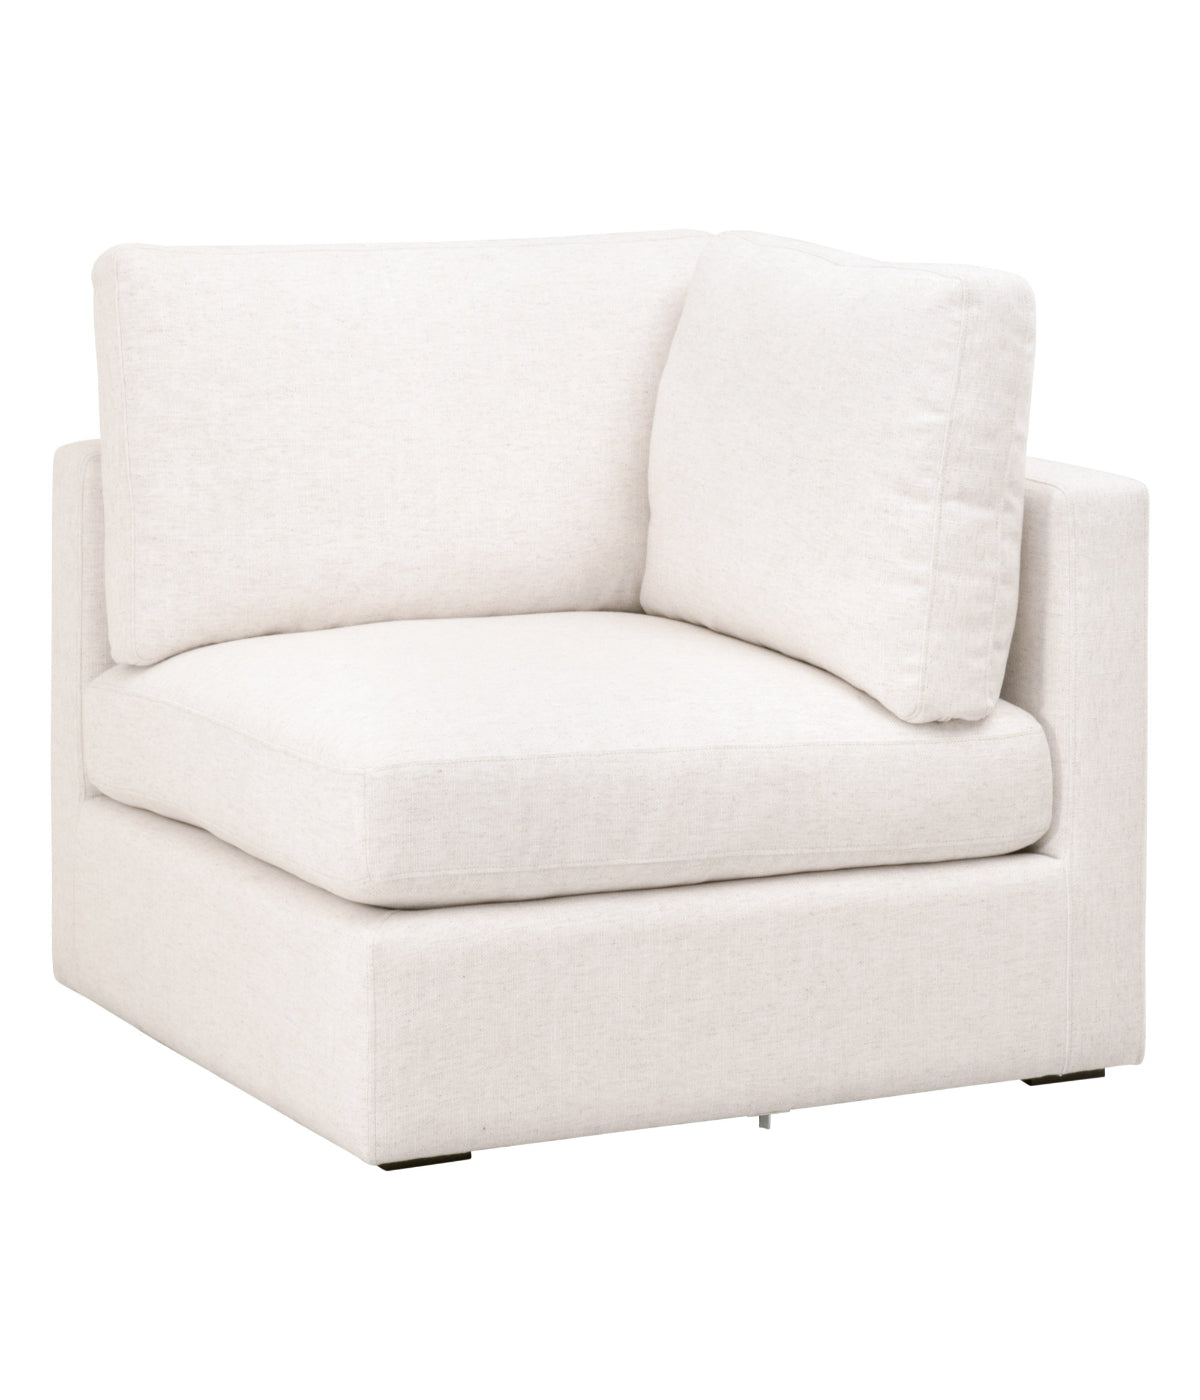 Daley Modular Corner Chair Cream